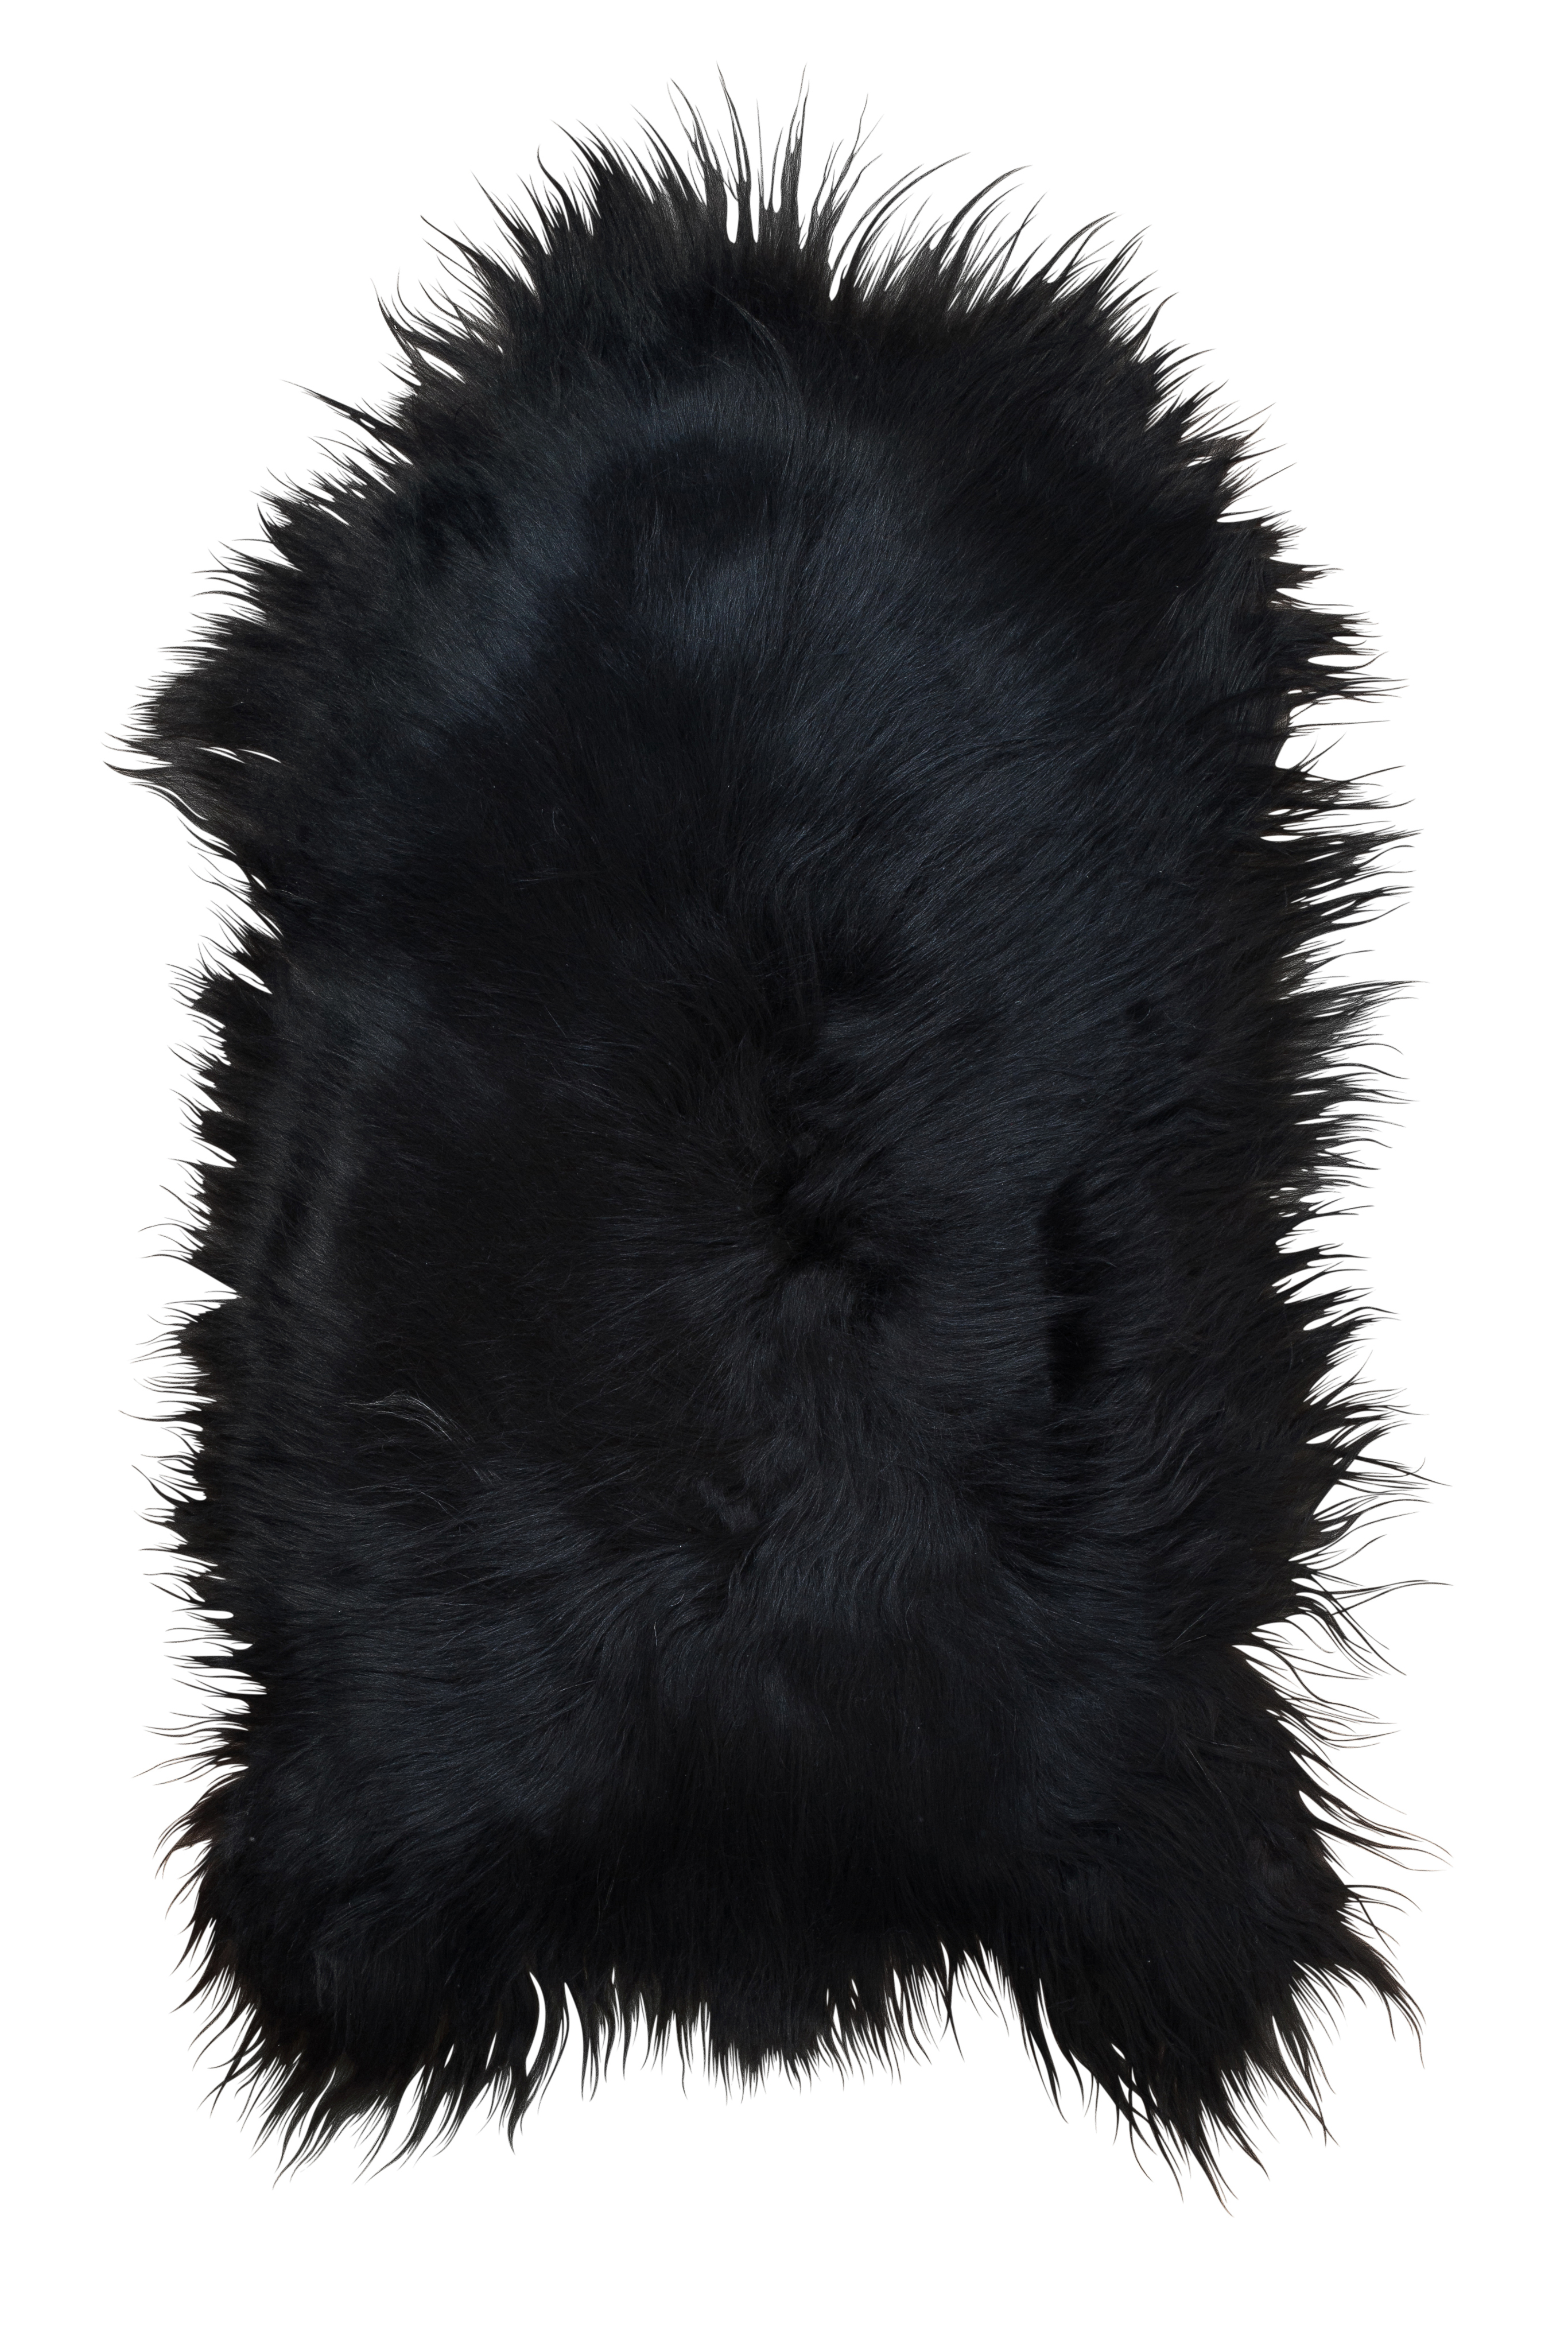 Zaloop Australisches Lammfell schwarz ca. 100-110 cm lang : :  Sonstiges